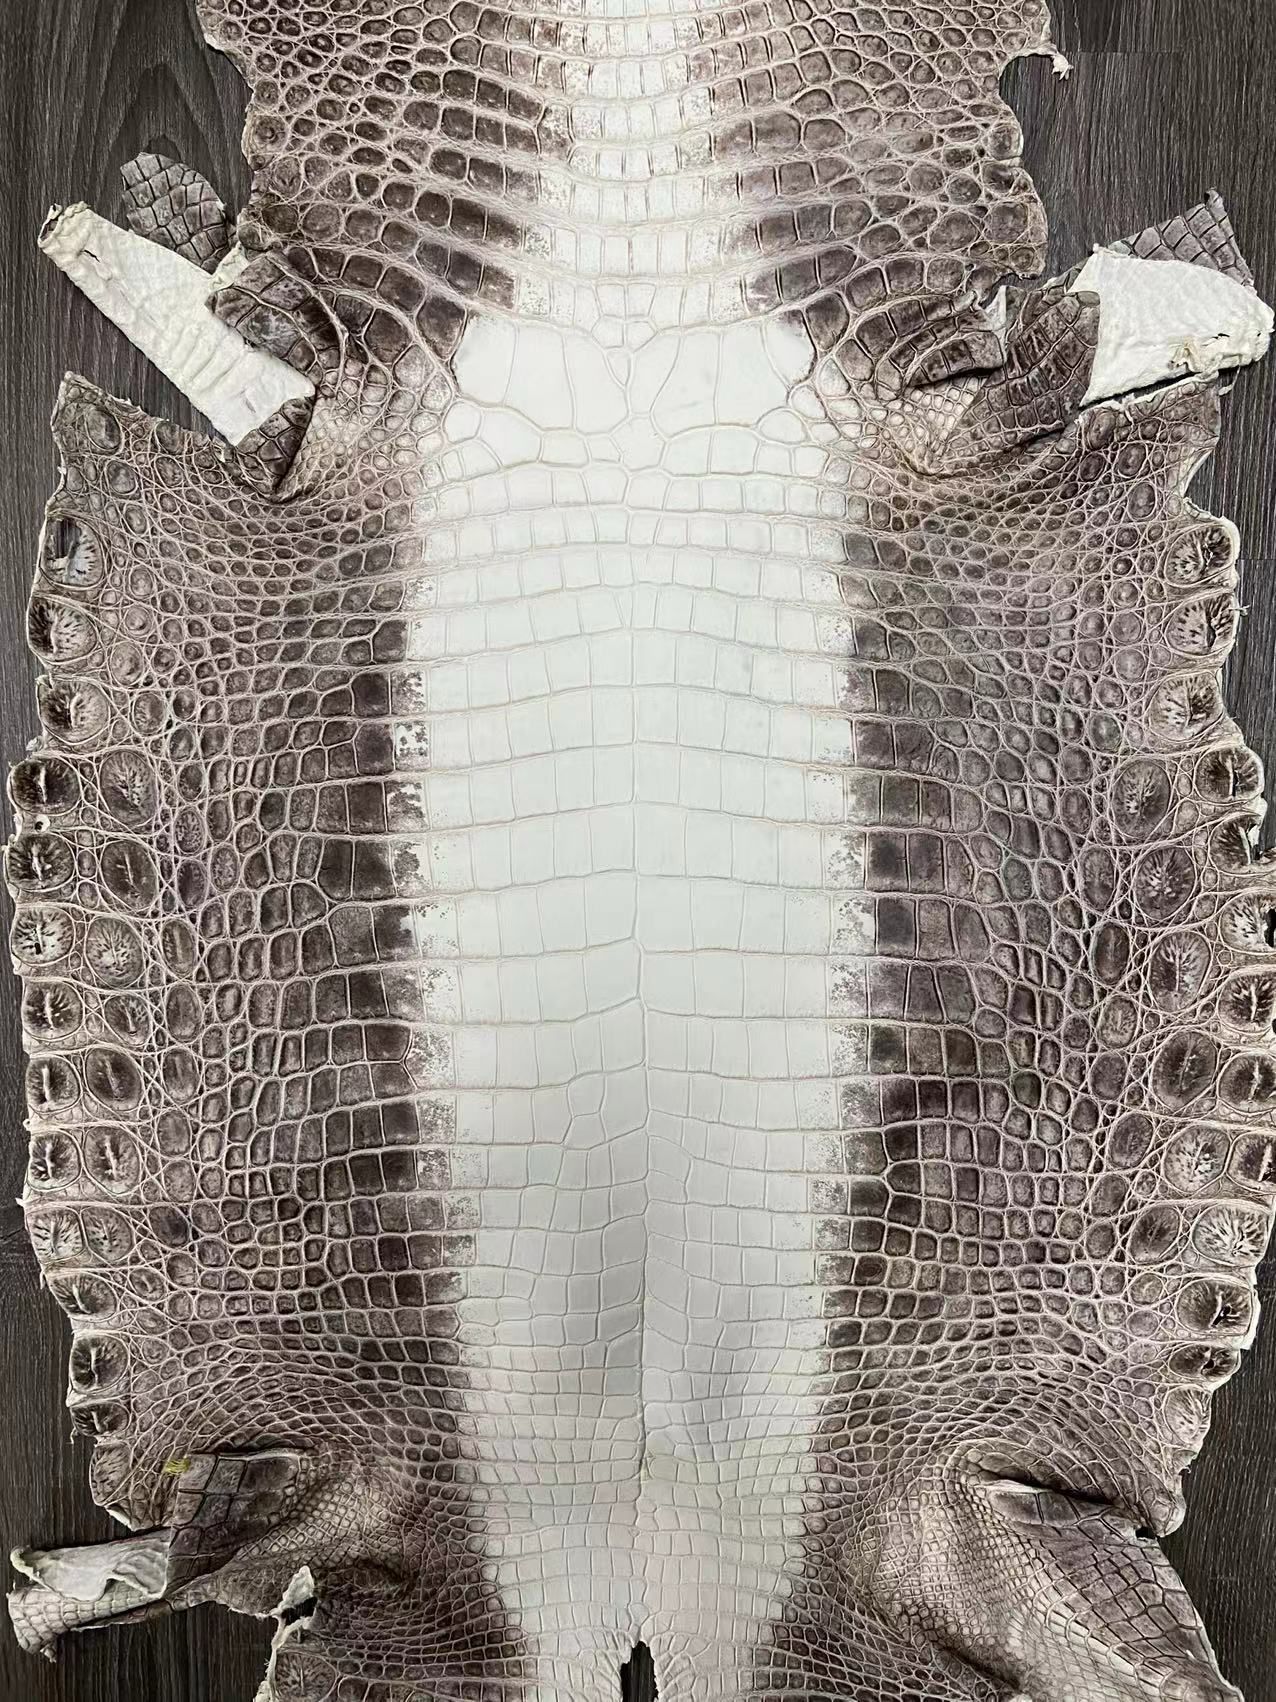 Himalayan Nilo Crocodile Matte Finish (Grade 1) - Sunny Exotic Leathers